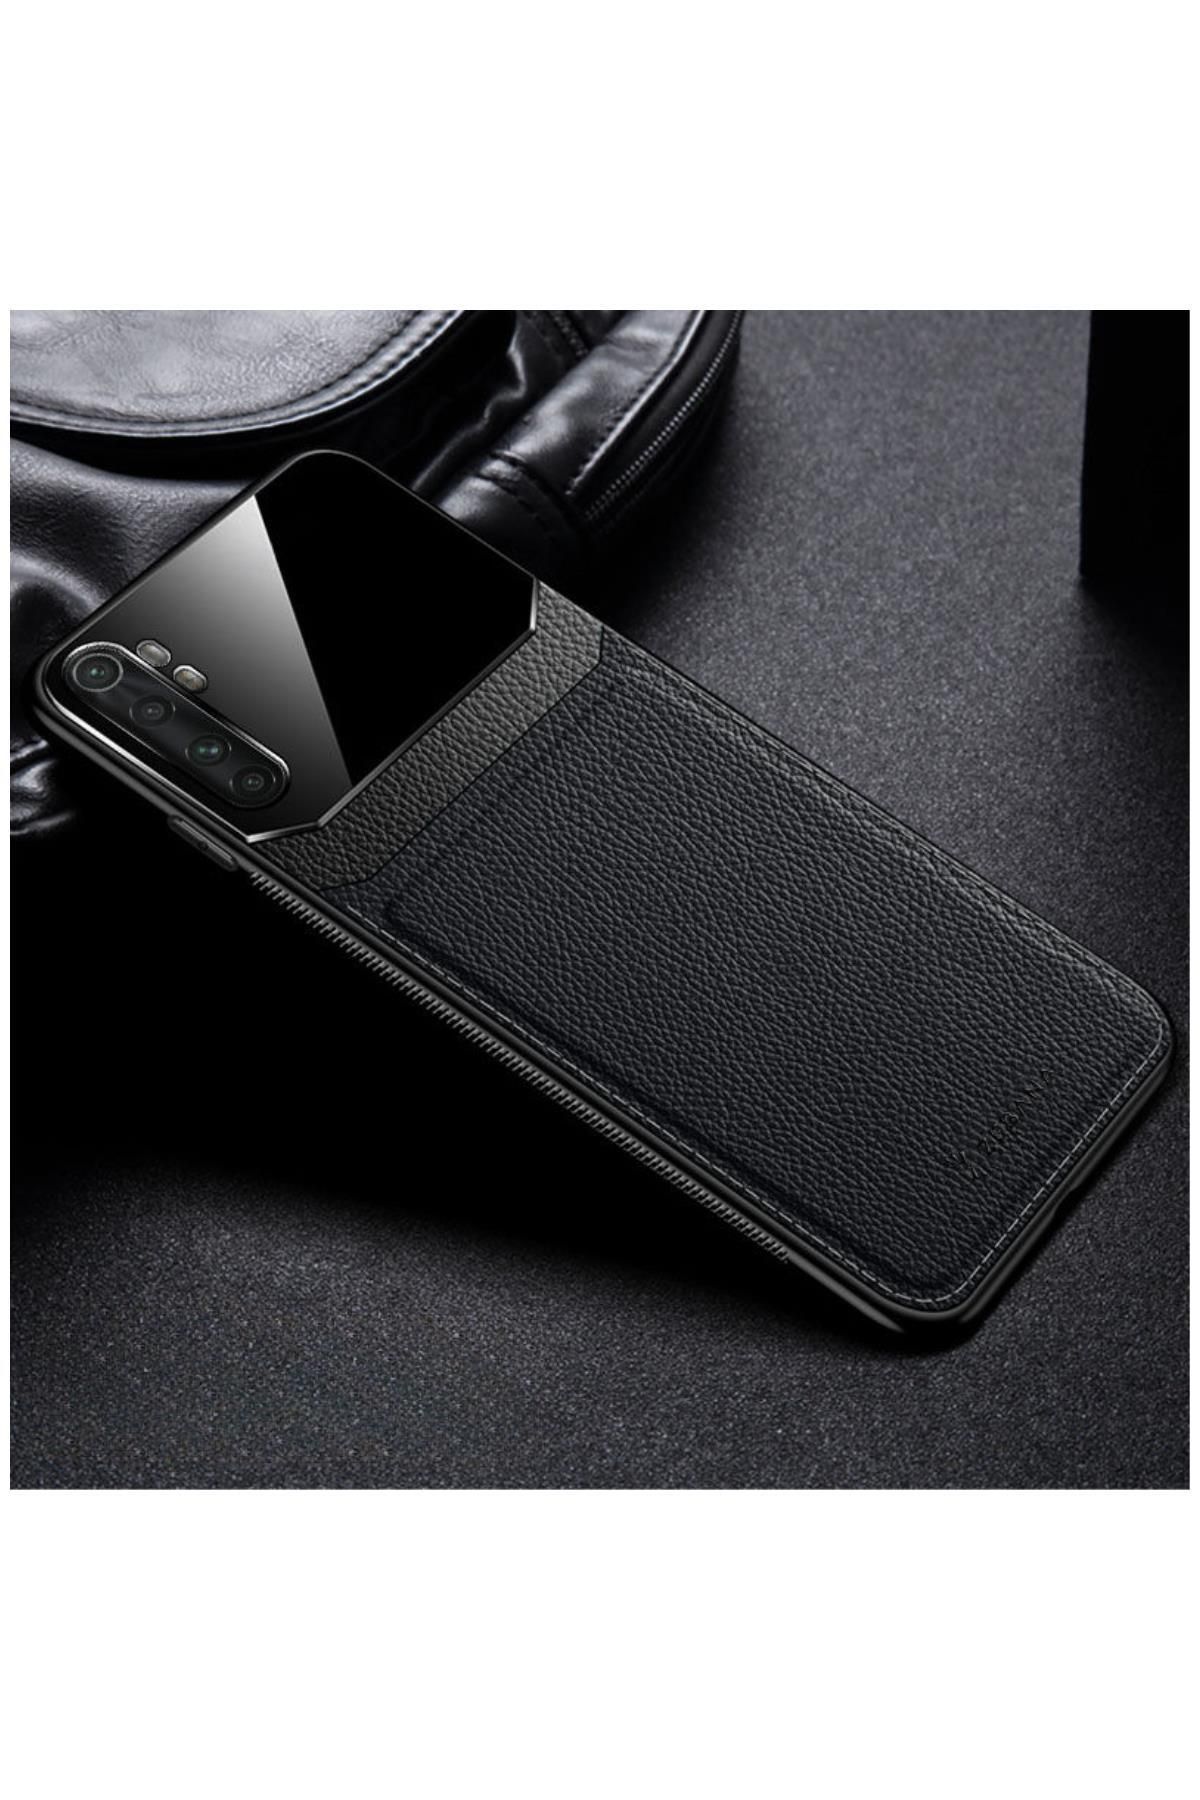 Zebana Xiaomi Mi Note 10 Lite Uyumlu Kılıf Lens Deri Kılıf Siyah